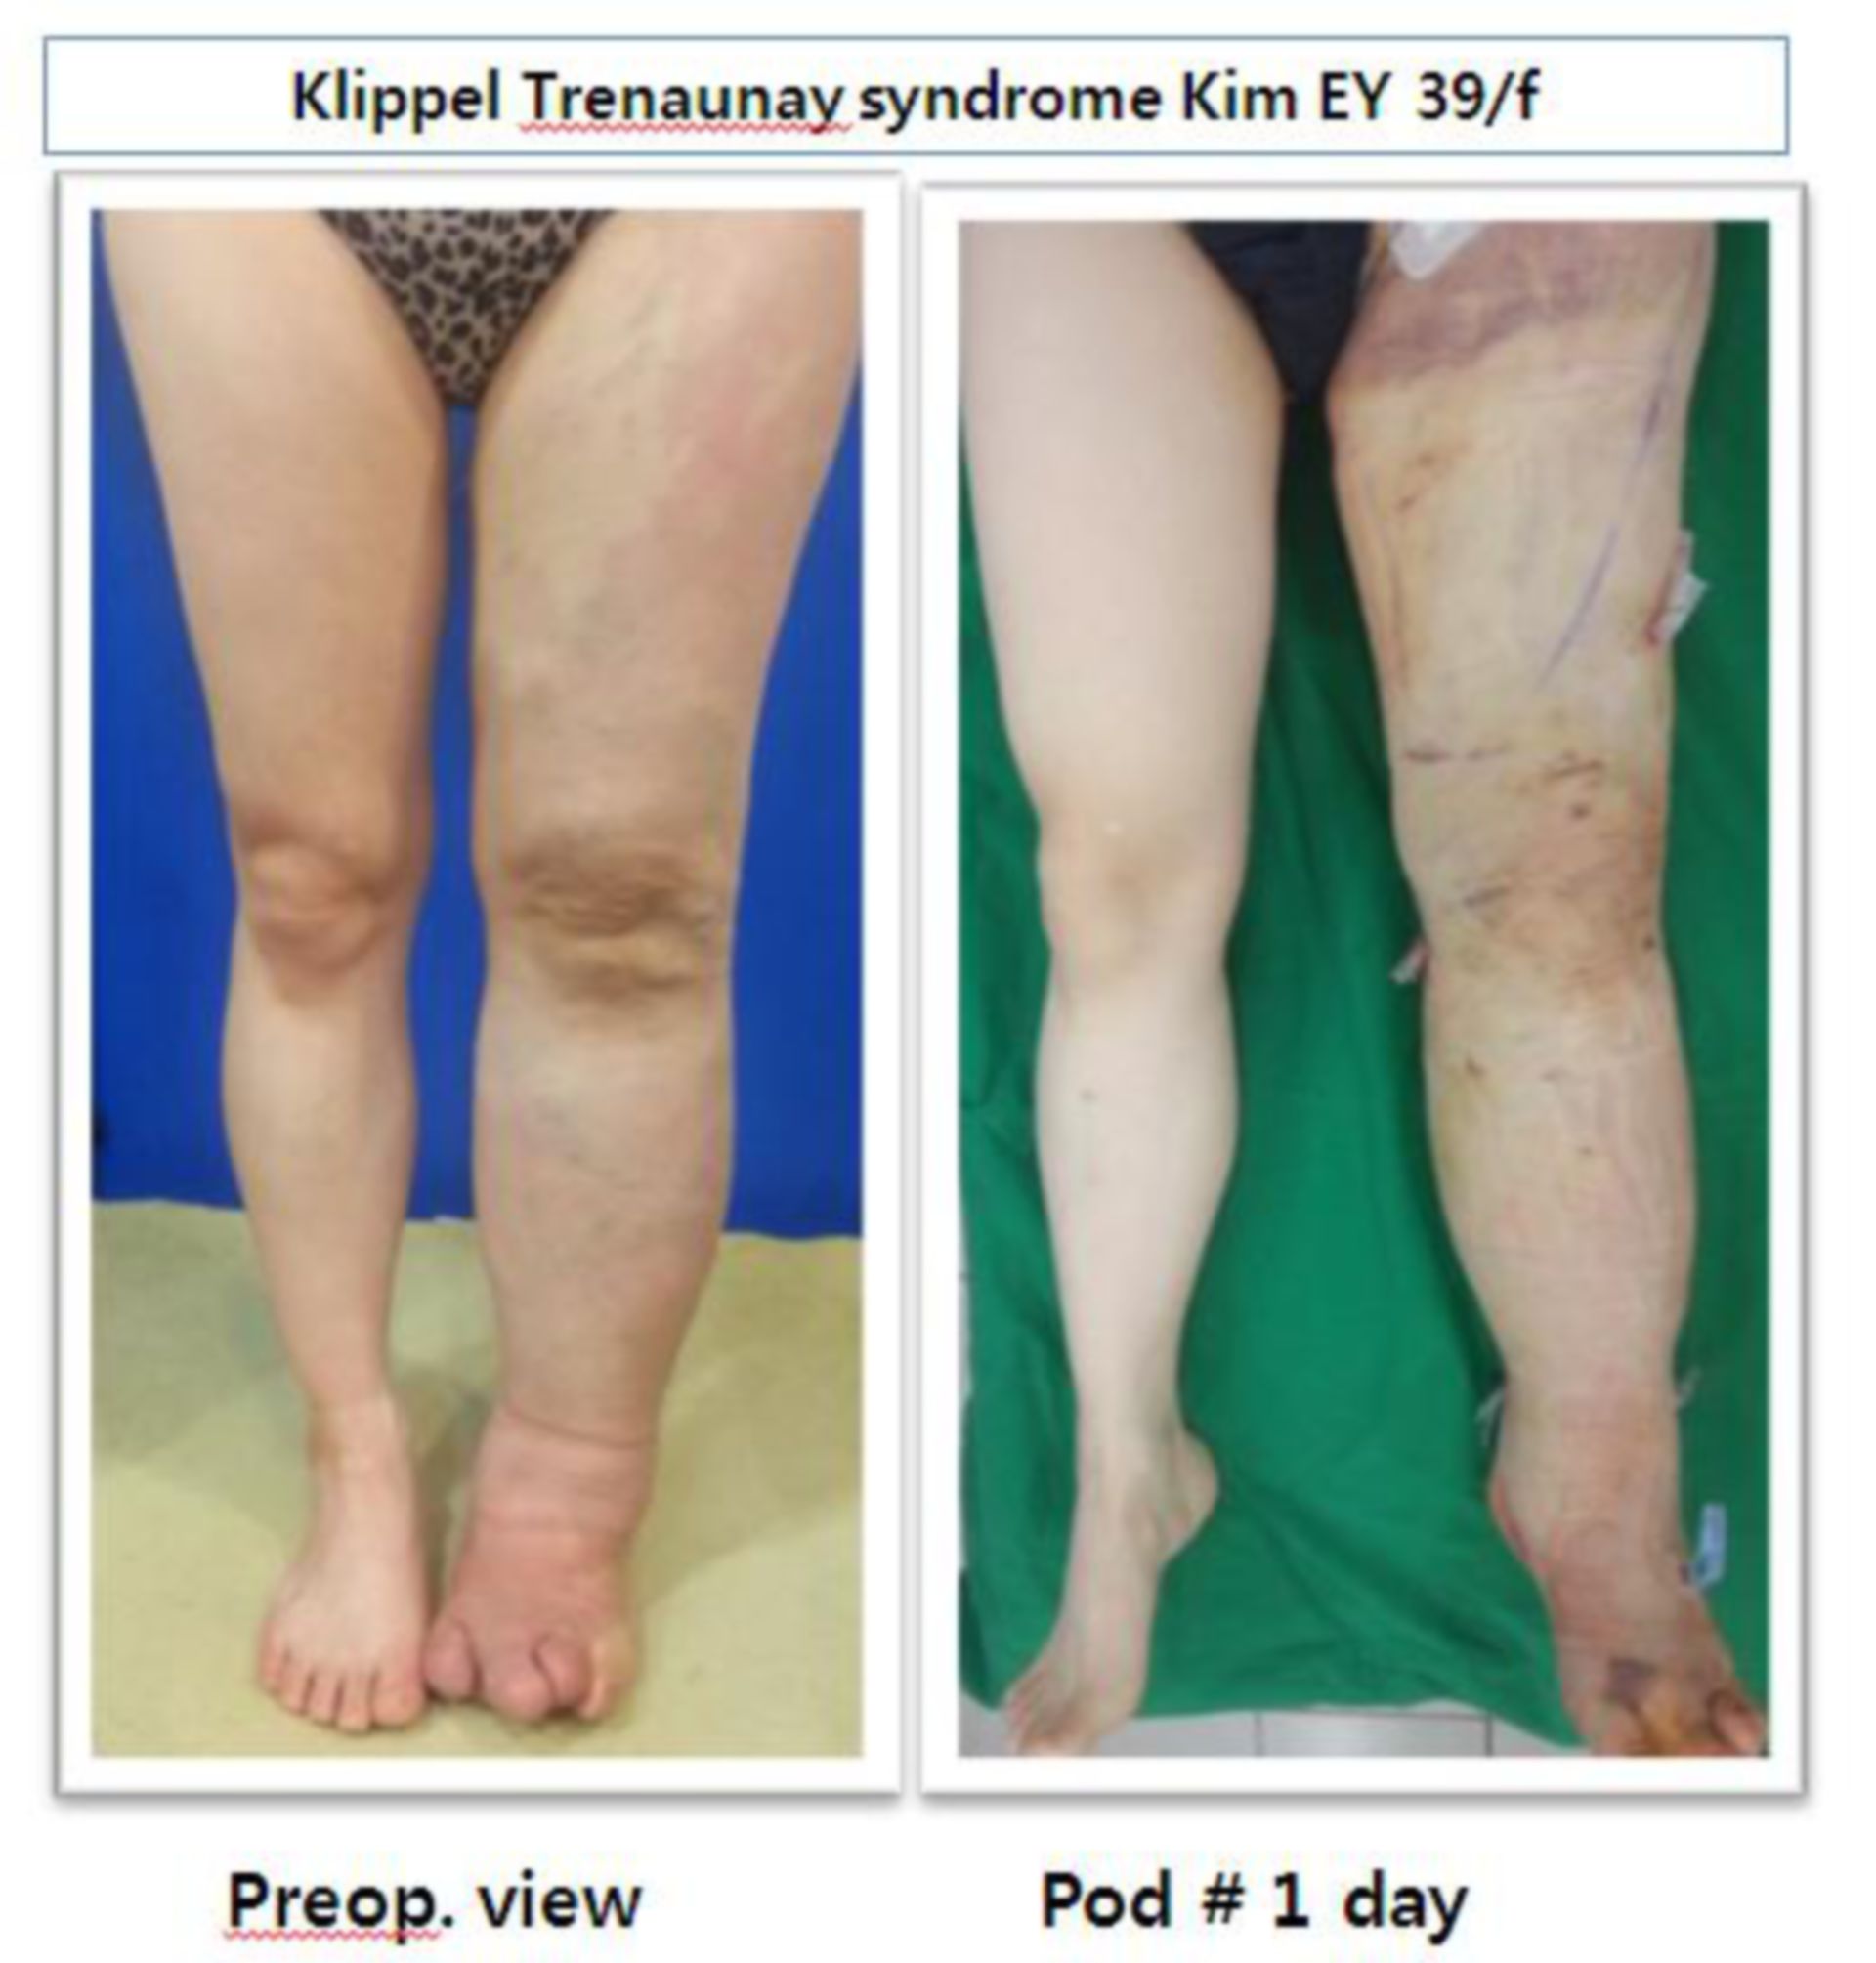 La sindrome di Klippel Trenaunay linfedema 39 / f (Yonsei S Hospital, Seoul, Korea)